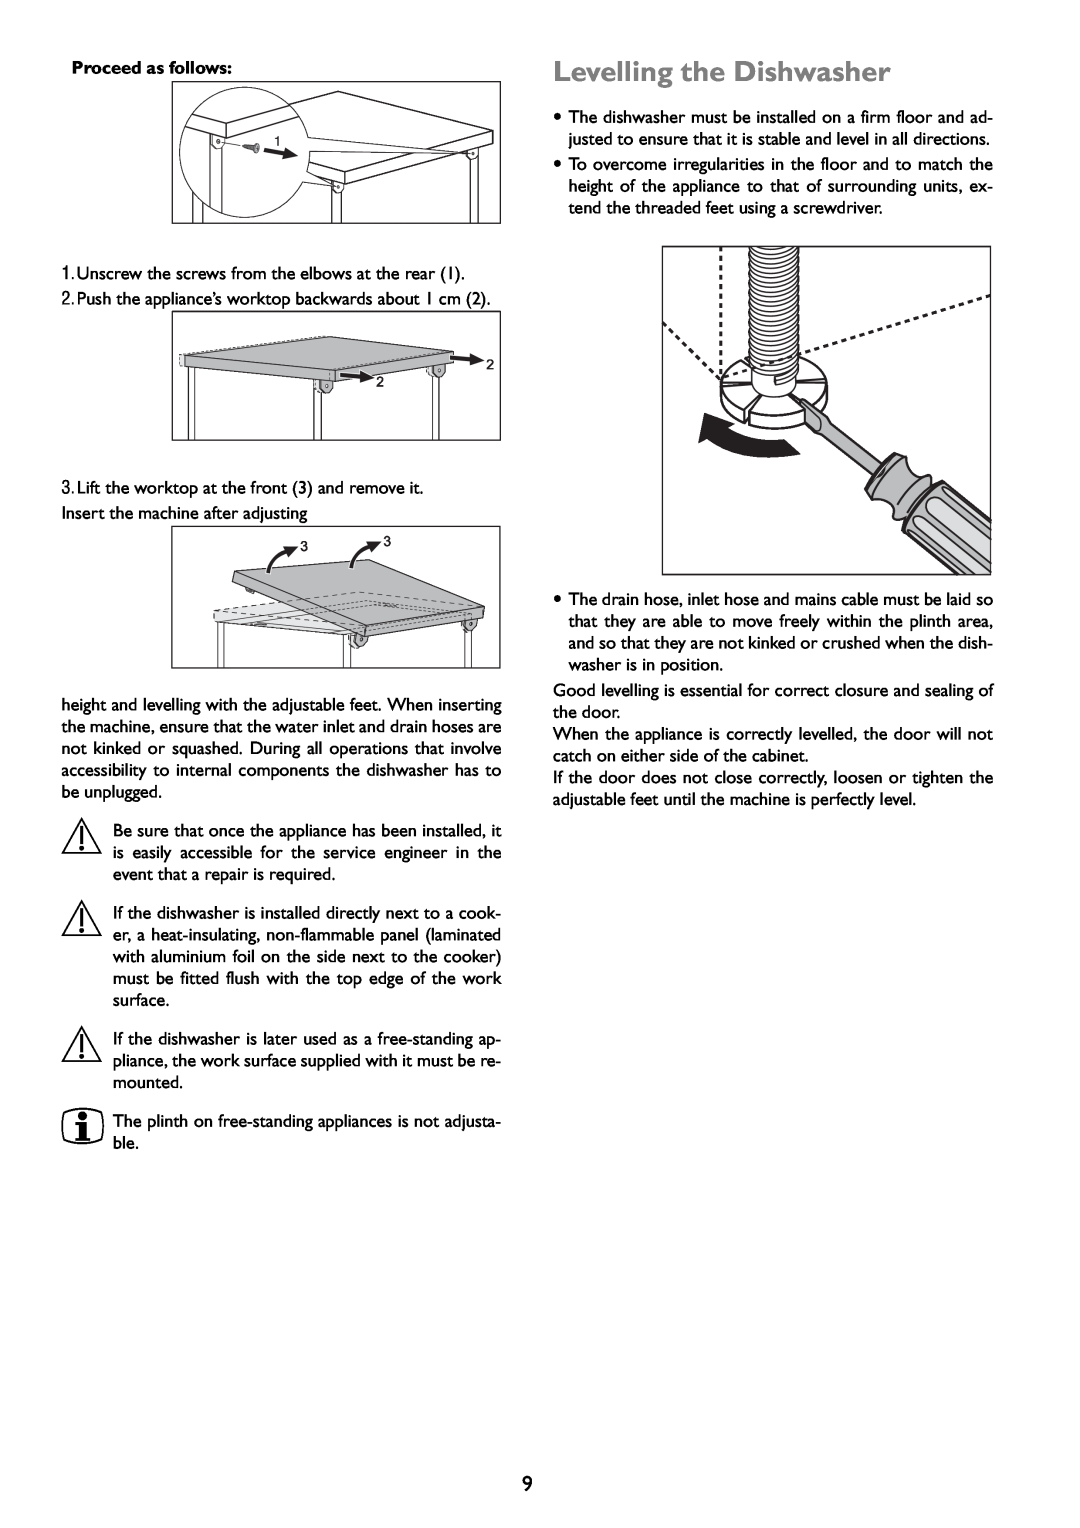 John Lewis JLDWW 1203 instruction manual Levelling the Dishwasher, Proceed as follows 